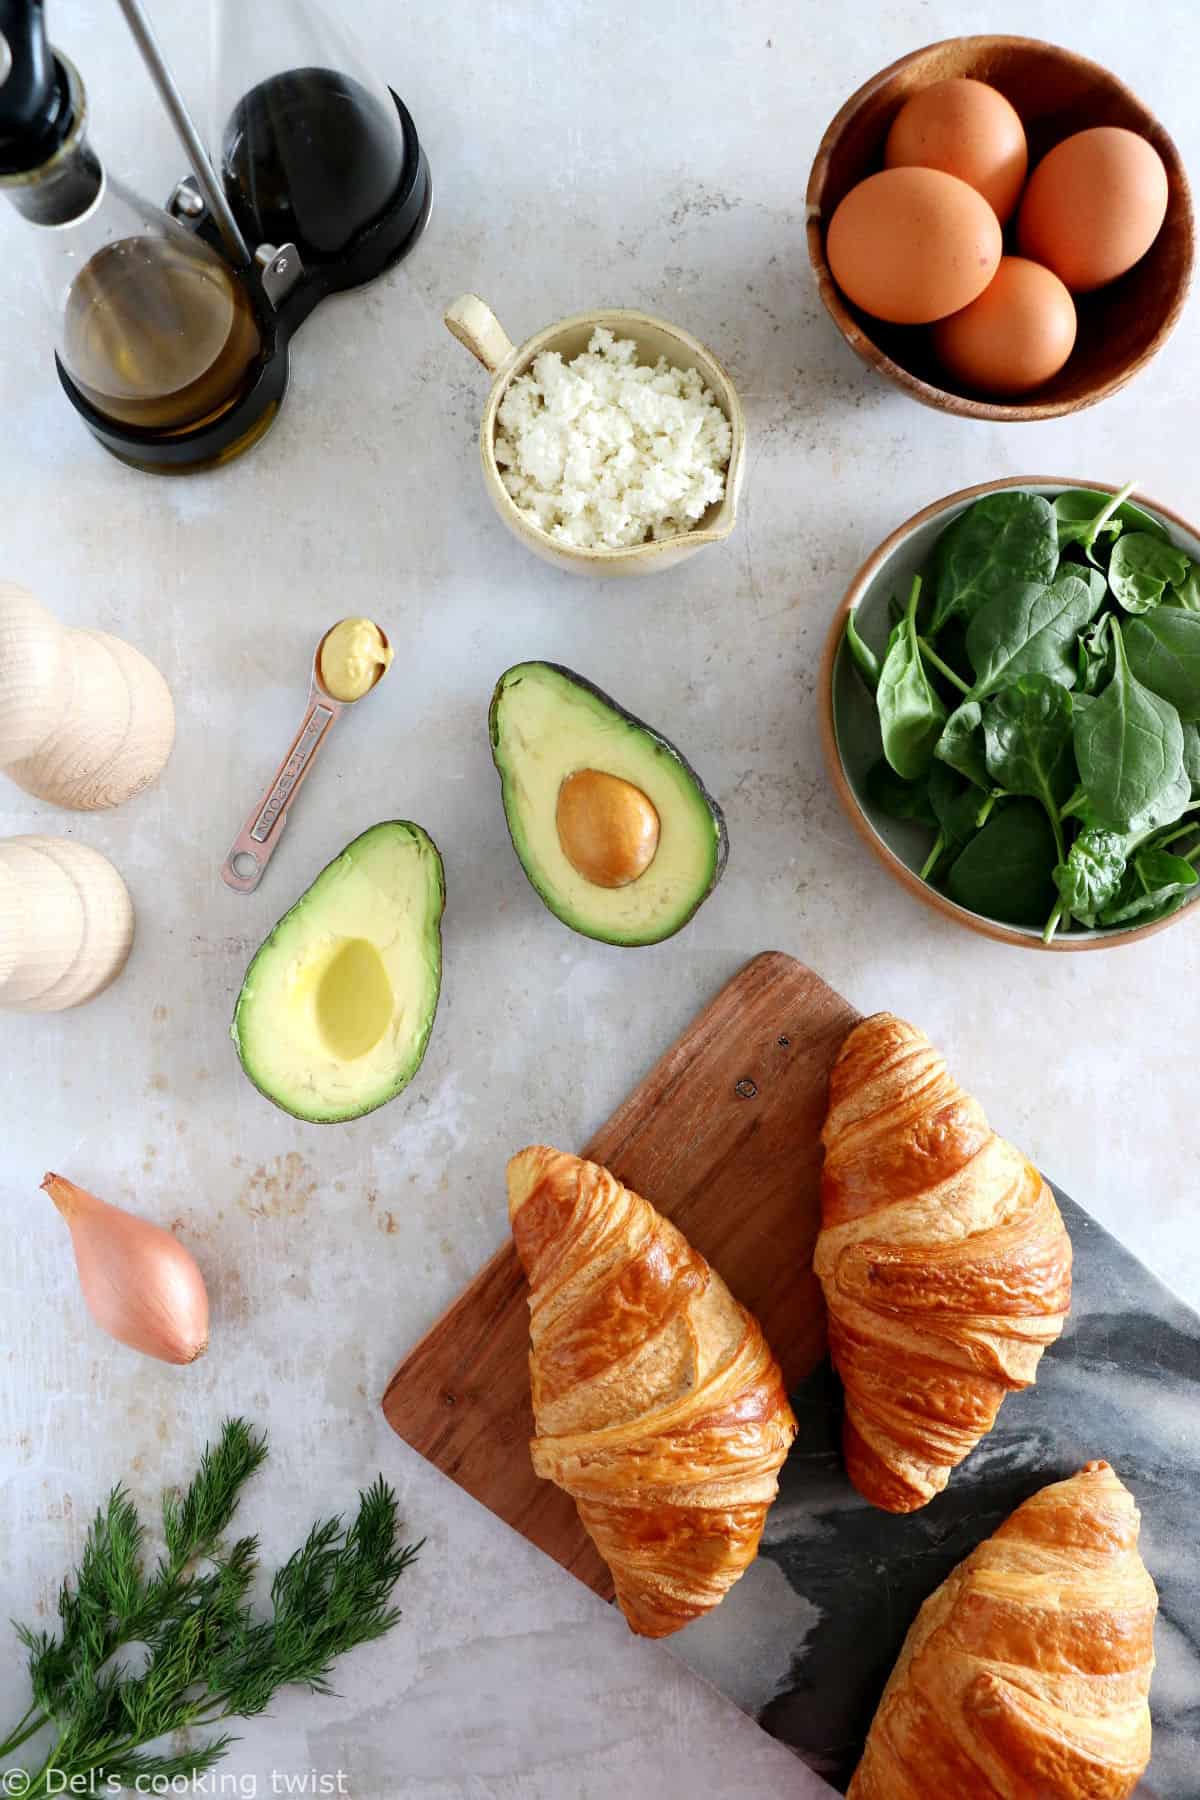 https://www.delscookingtwist.com/wp-content/uploads/2022/03/Scrambled-Egg-Croissant-Breakfast-Sandwich_Ingredients.jpg